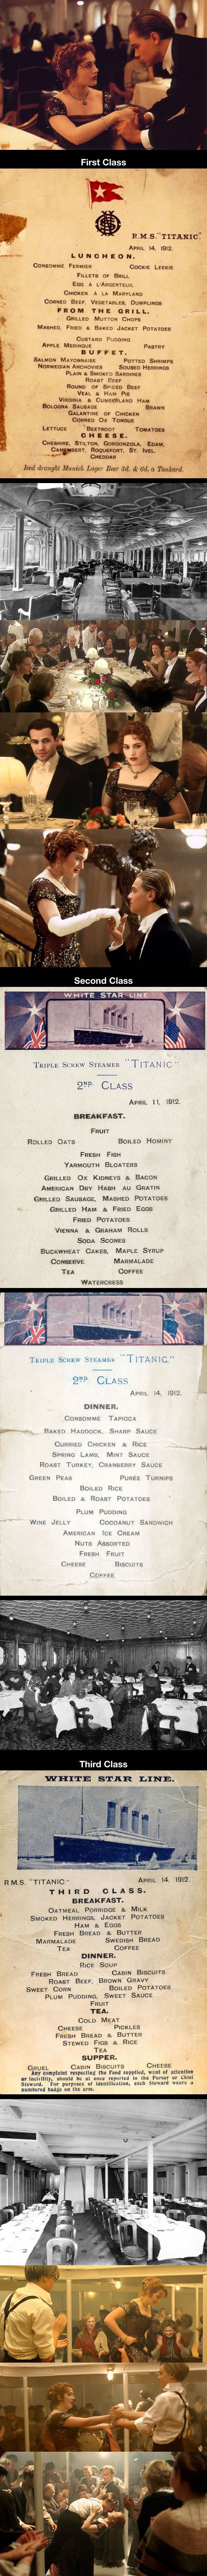 Titanic food menus for 1st, 2nd & 3rd class passengers